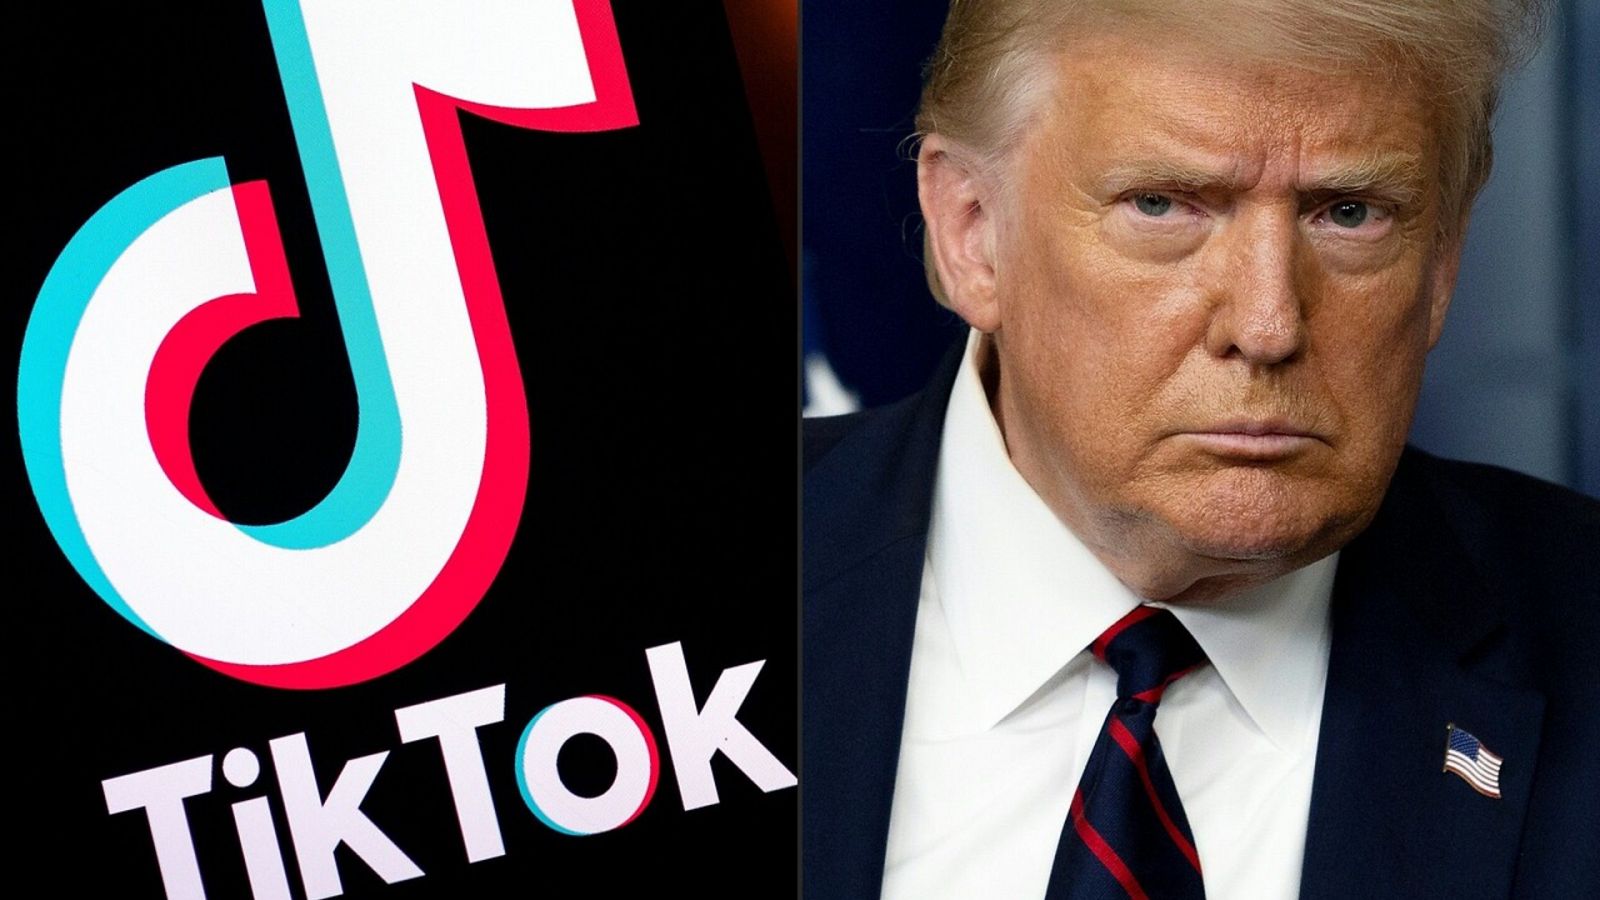 24 horas fin de semana - 20 horas - TikTok le responde a Trump que no planea irse "a ninguna parte" - Escuchar ahora 